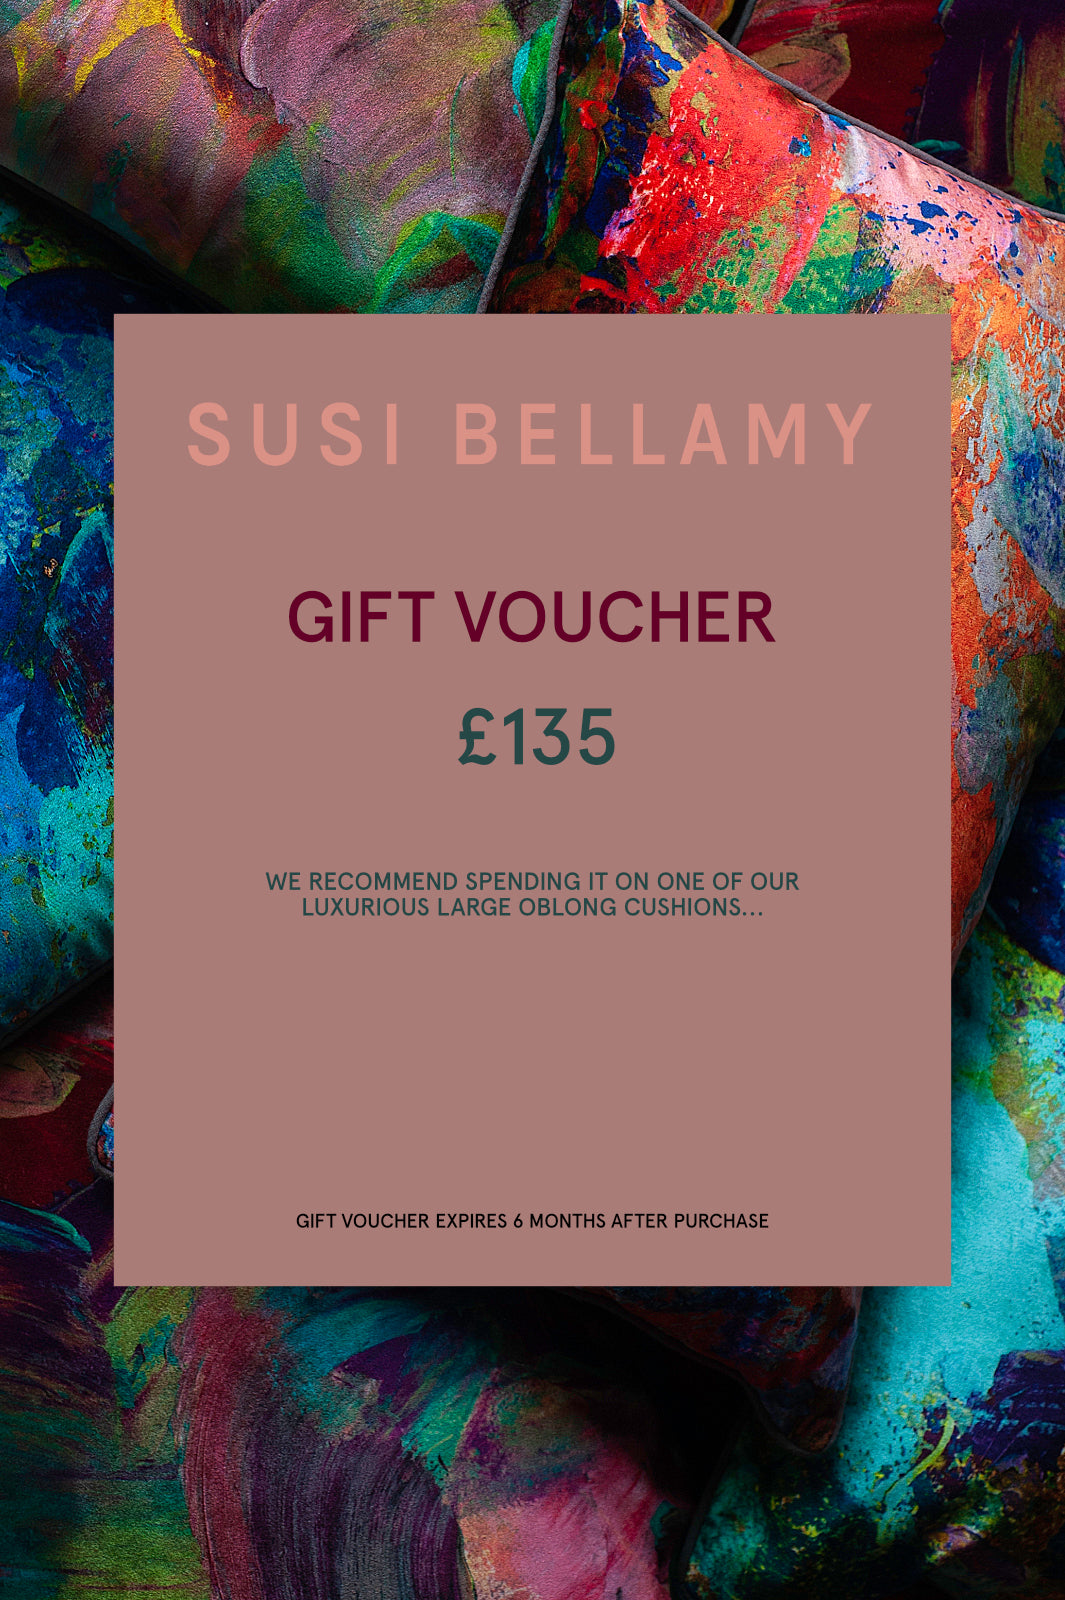 Susi Bellamy Gift Voucher for £135